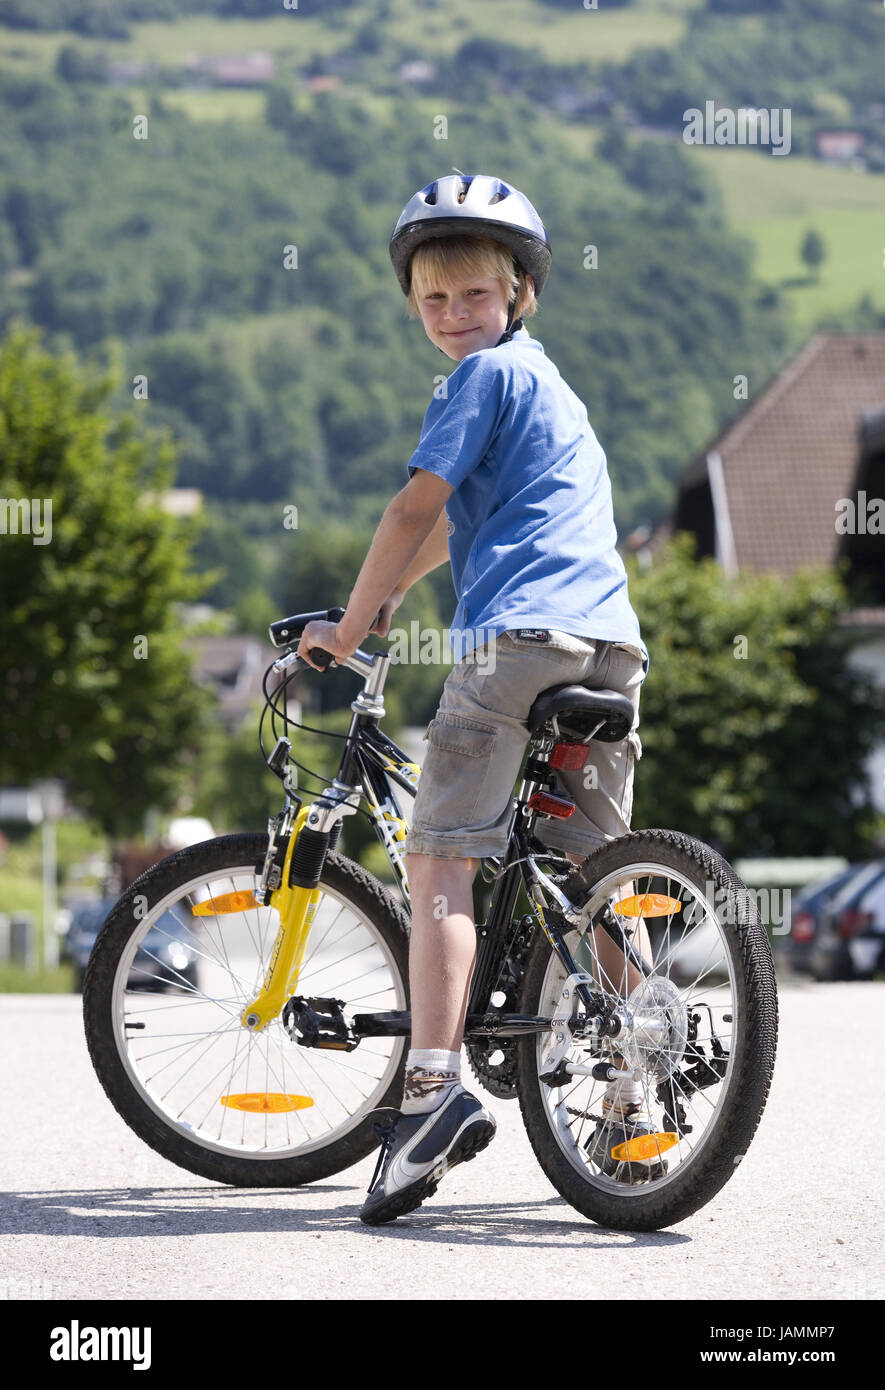 Junge, Fahrrad, Straße, Stand, Rückfahrkamera Stockfotografie - Alamy